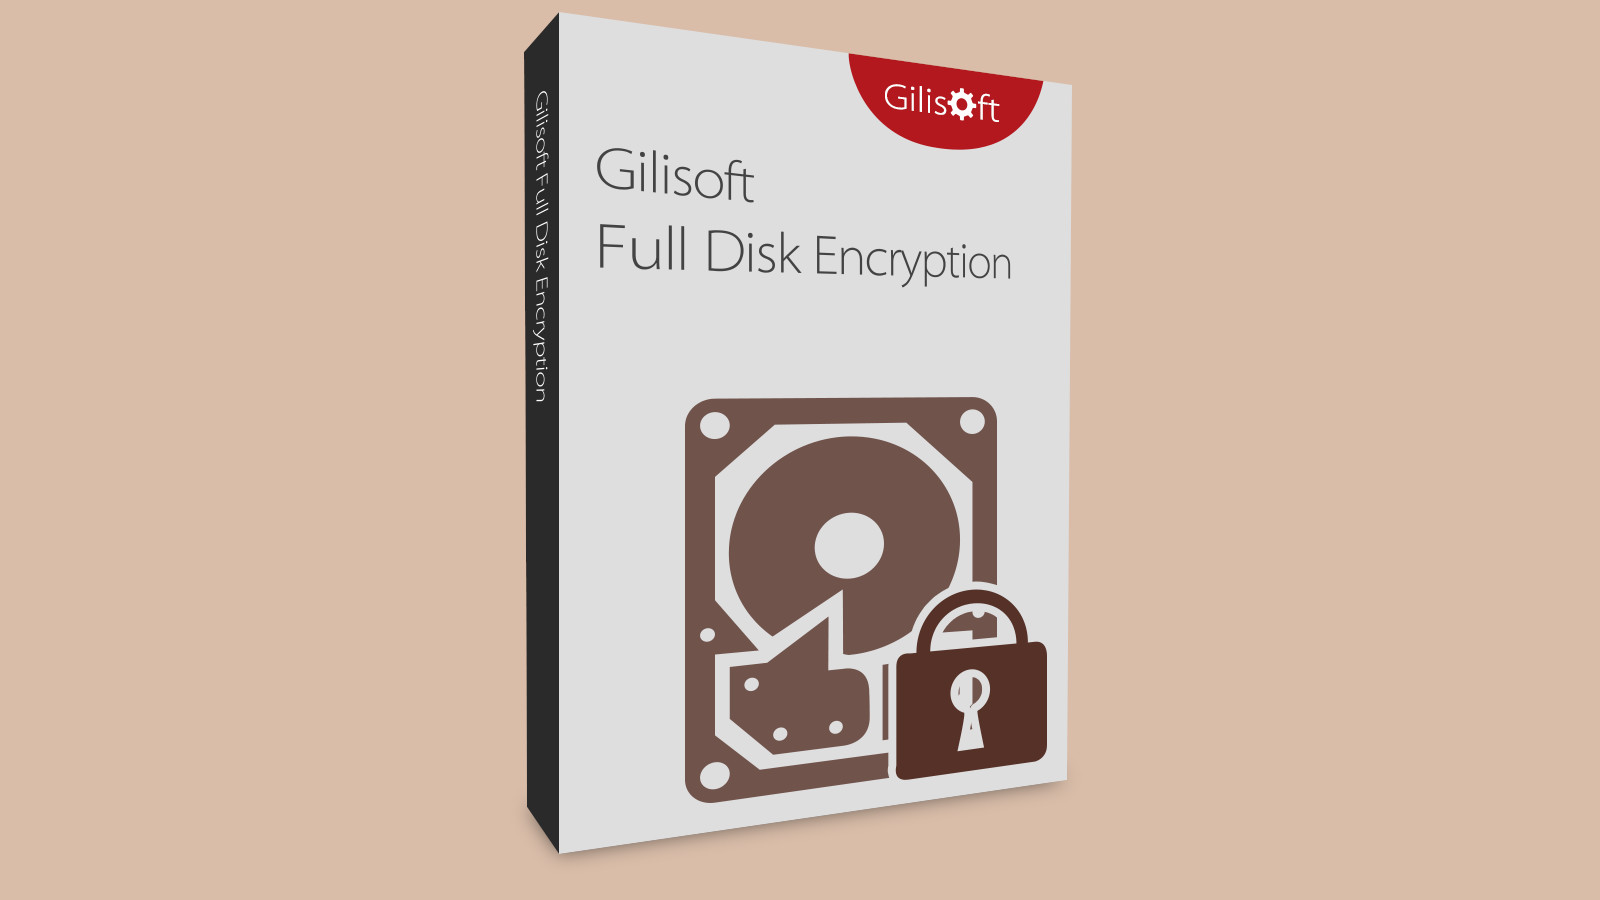 Gilisoft Full Disk Encryption CD Key 19.72$